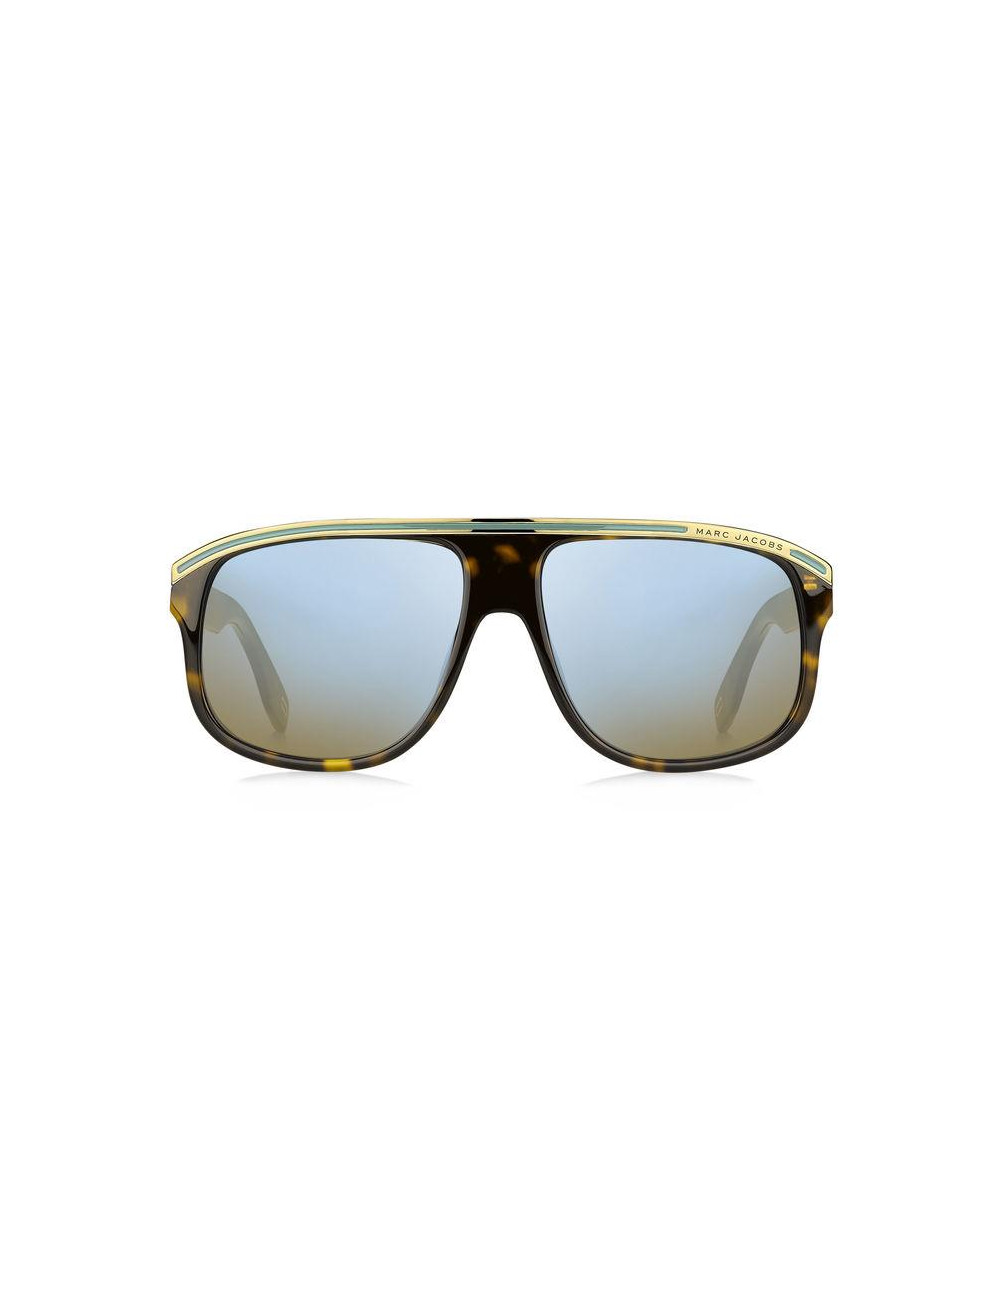 MARC JACOBS Sunglasses - black/gold-coloured/black - Zalando.ie